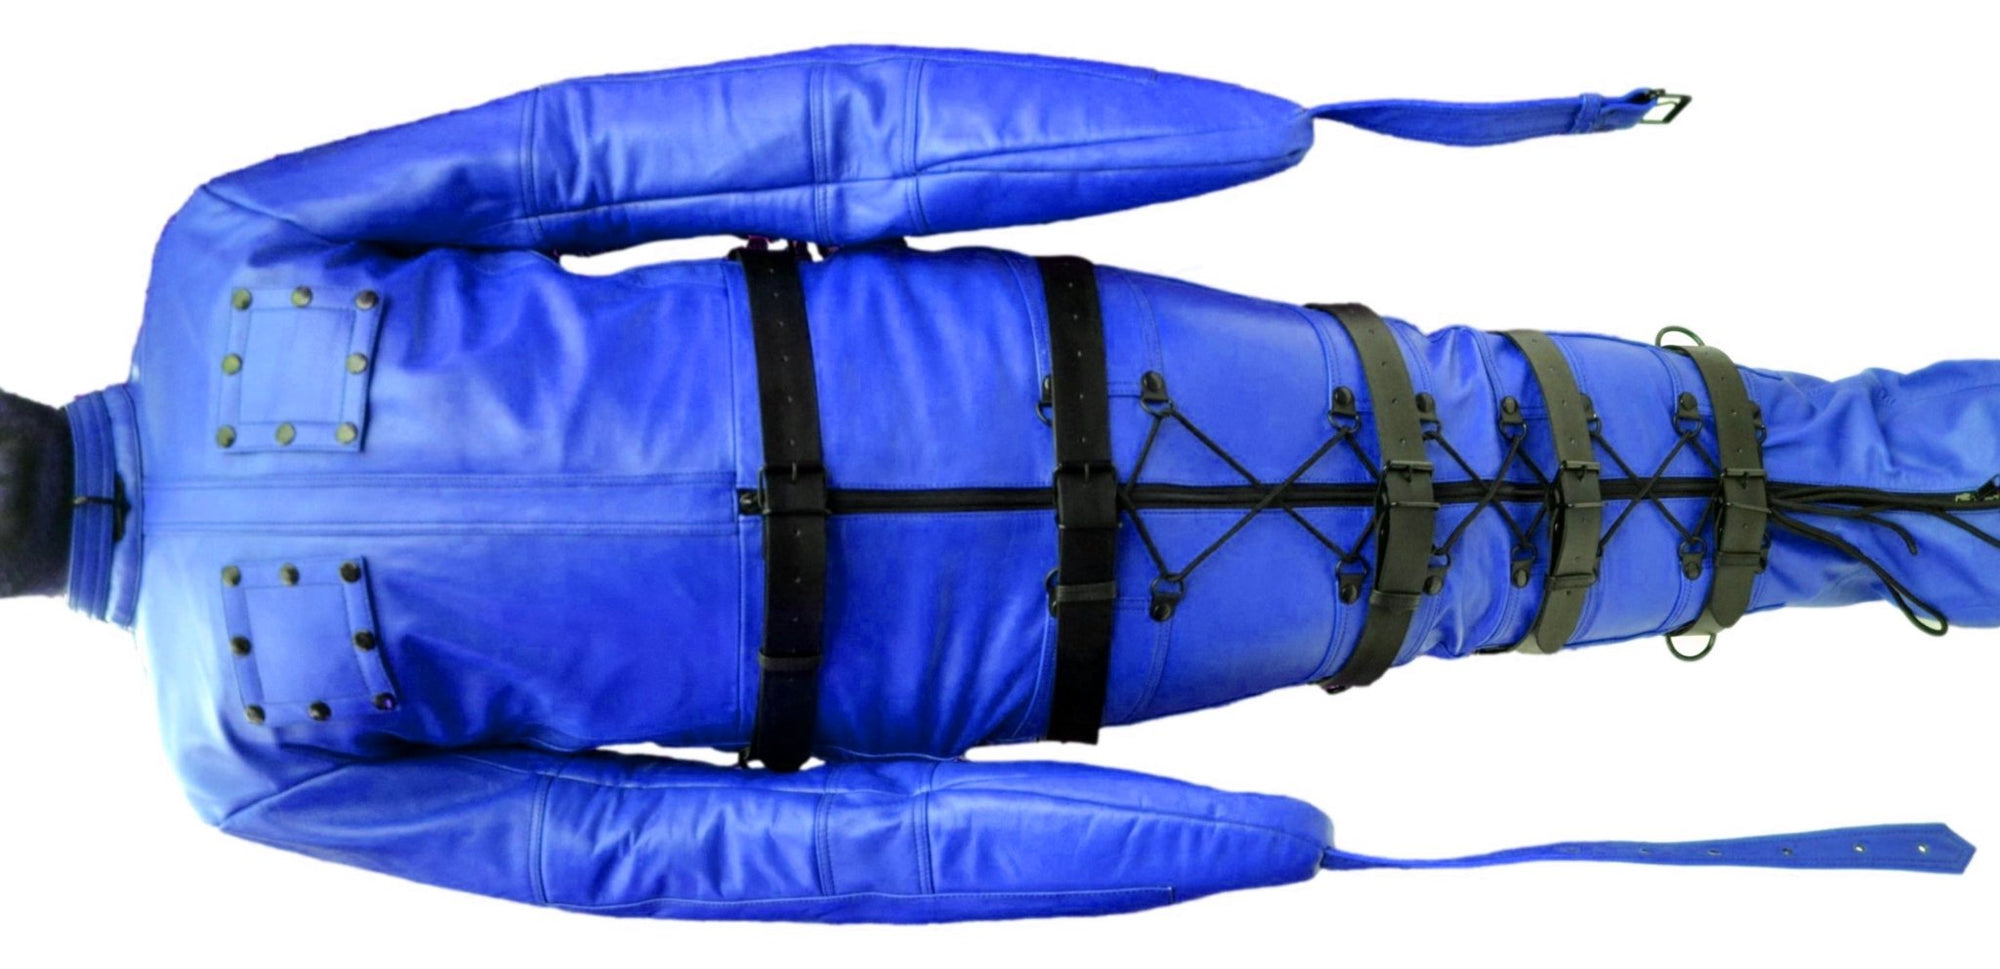 Copy of Leather Sleep Sack,Restraint,Bondage,Leather SleepSack,Blue - MRI Leathers